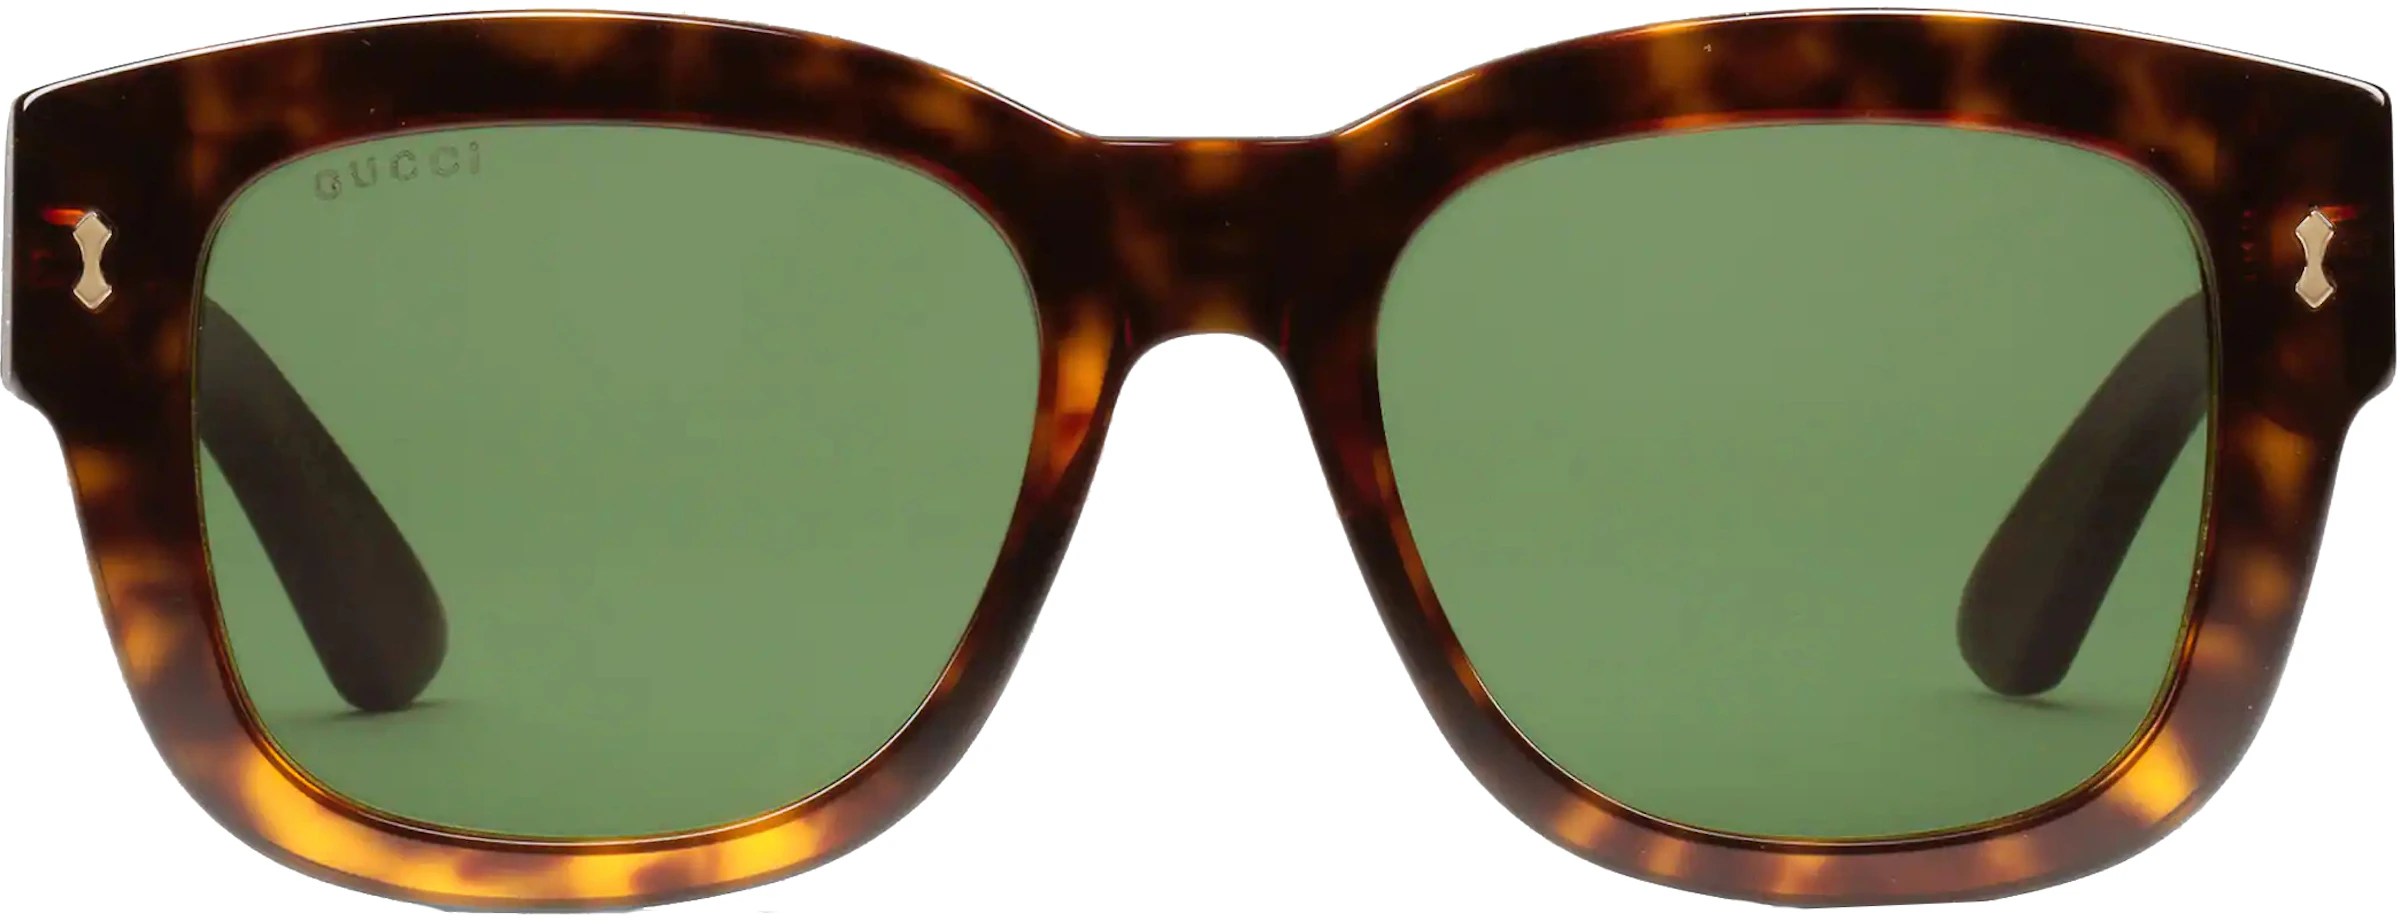 Gucci Rectangular Frame Sunglasses Tortoiseshell in Bio Acetate - US